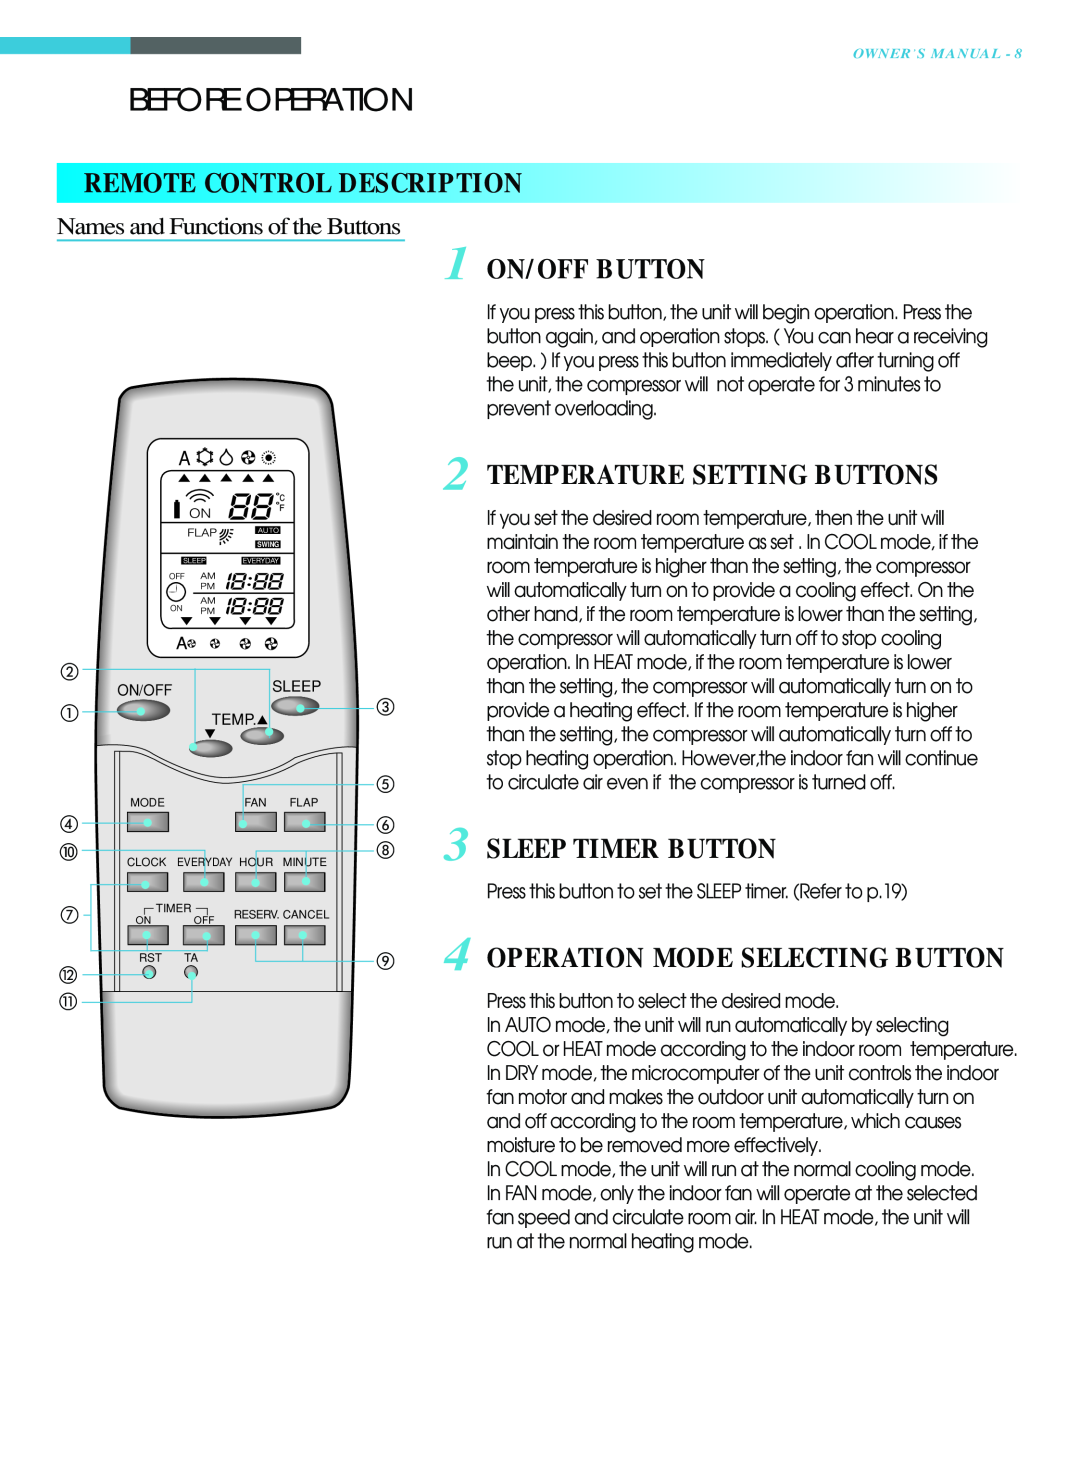 Toshiba RAS-18LKH-A Remote Control Description, 1 ON/OFF BUTTON, Temperature Setting Buttons, Sleep Timer Button 